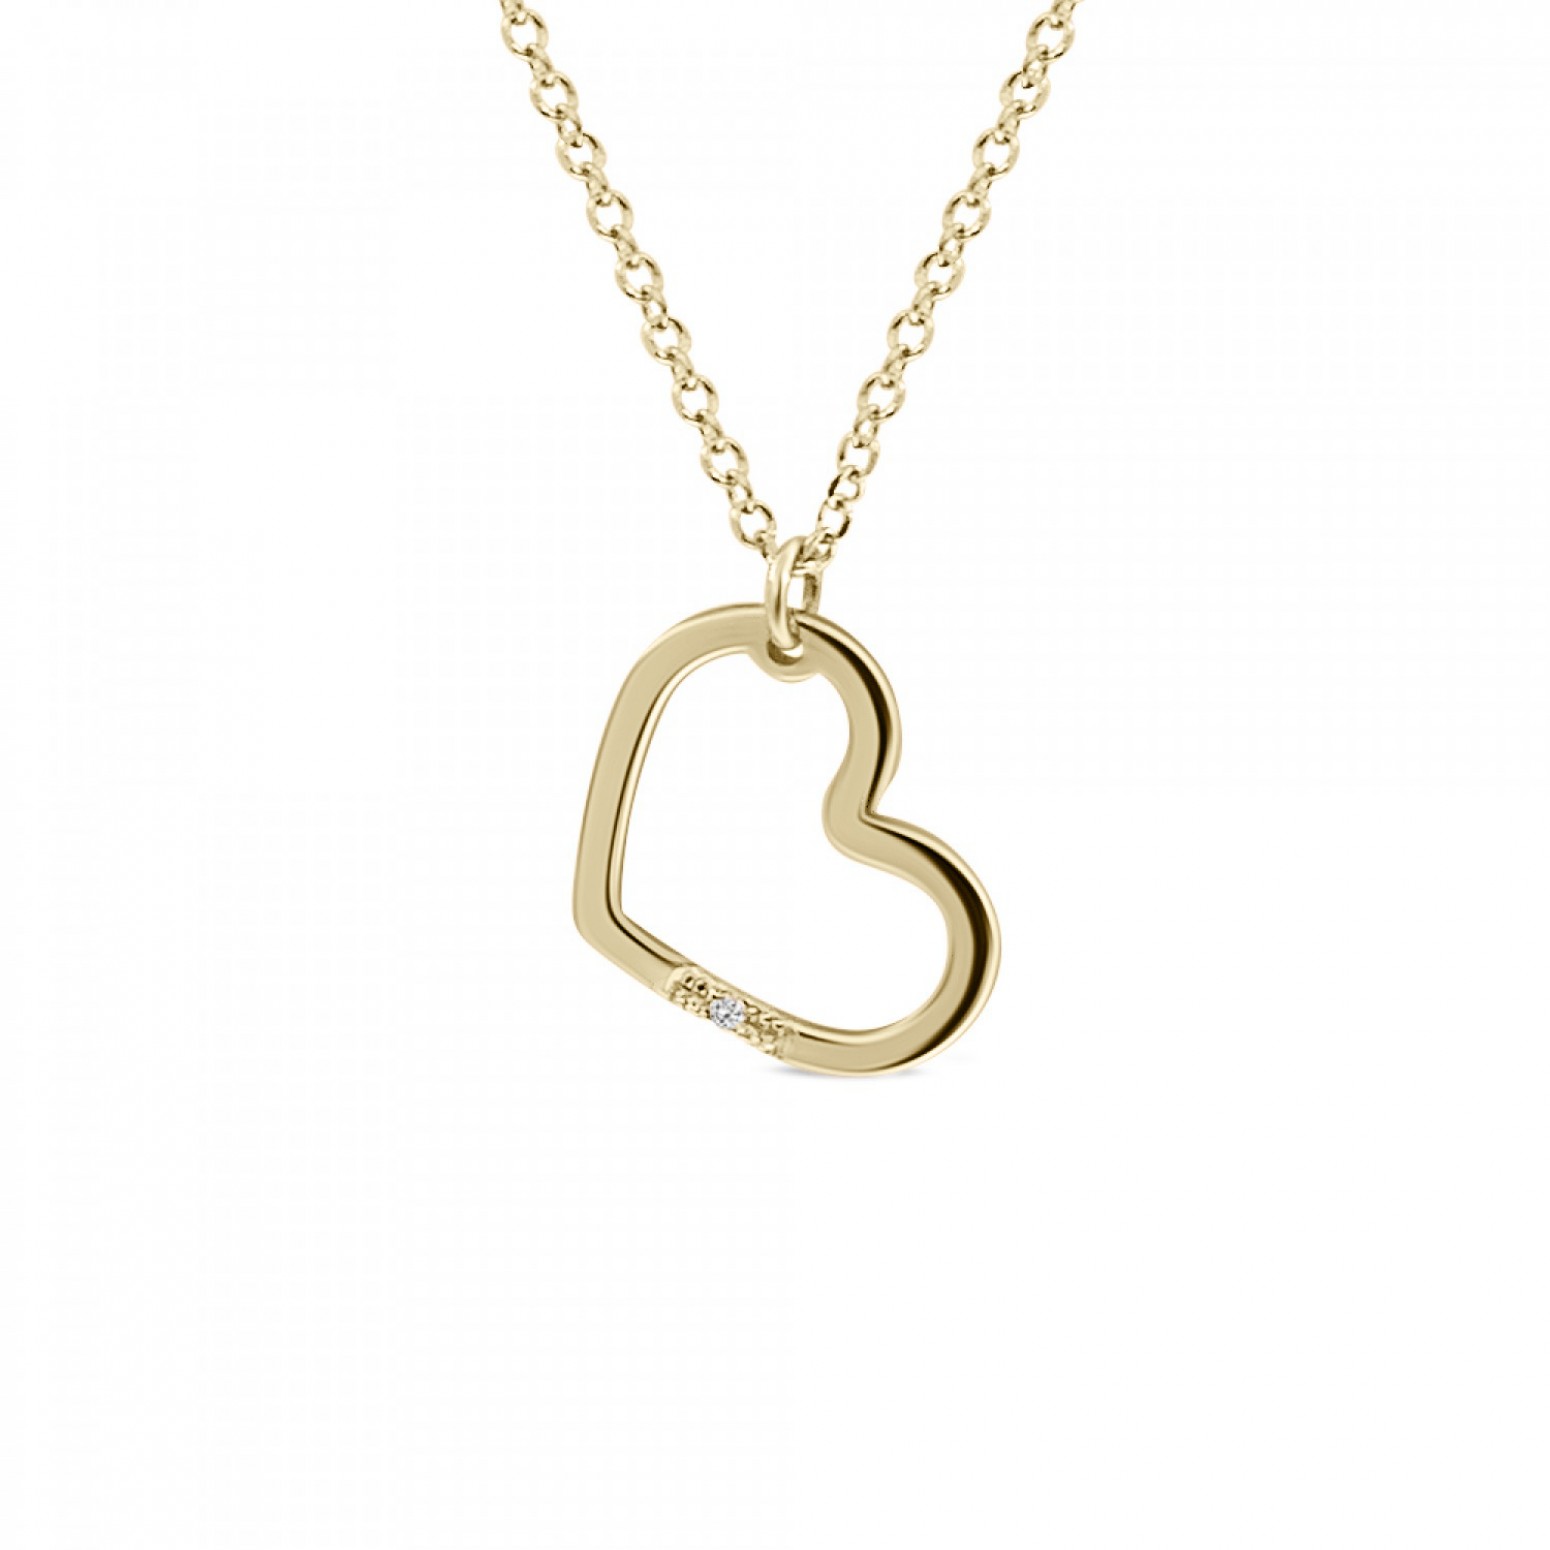 Heart necklace, Κ14 gold with diamond 0.003ct, VS2, H ko5309 NECKLACES Κοσμηματα - chrilia.gr